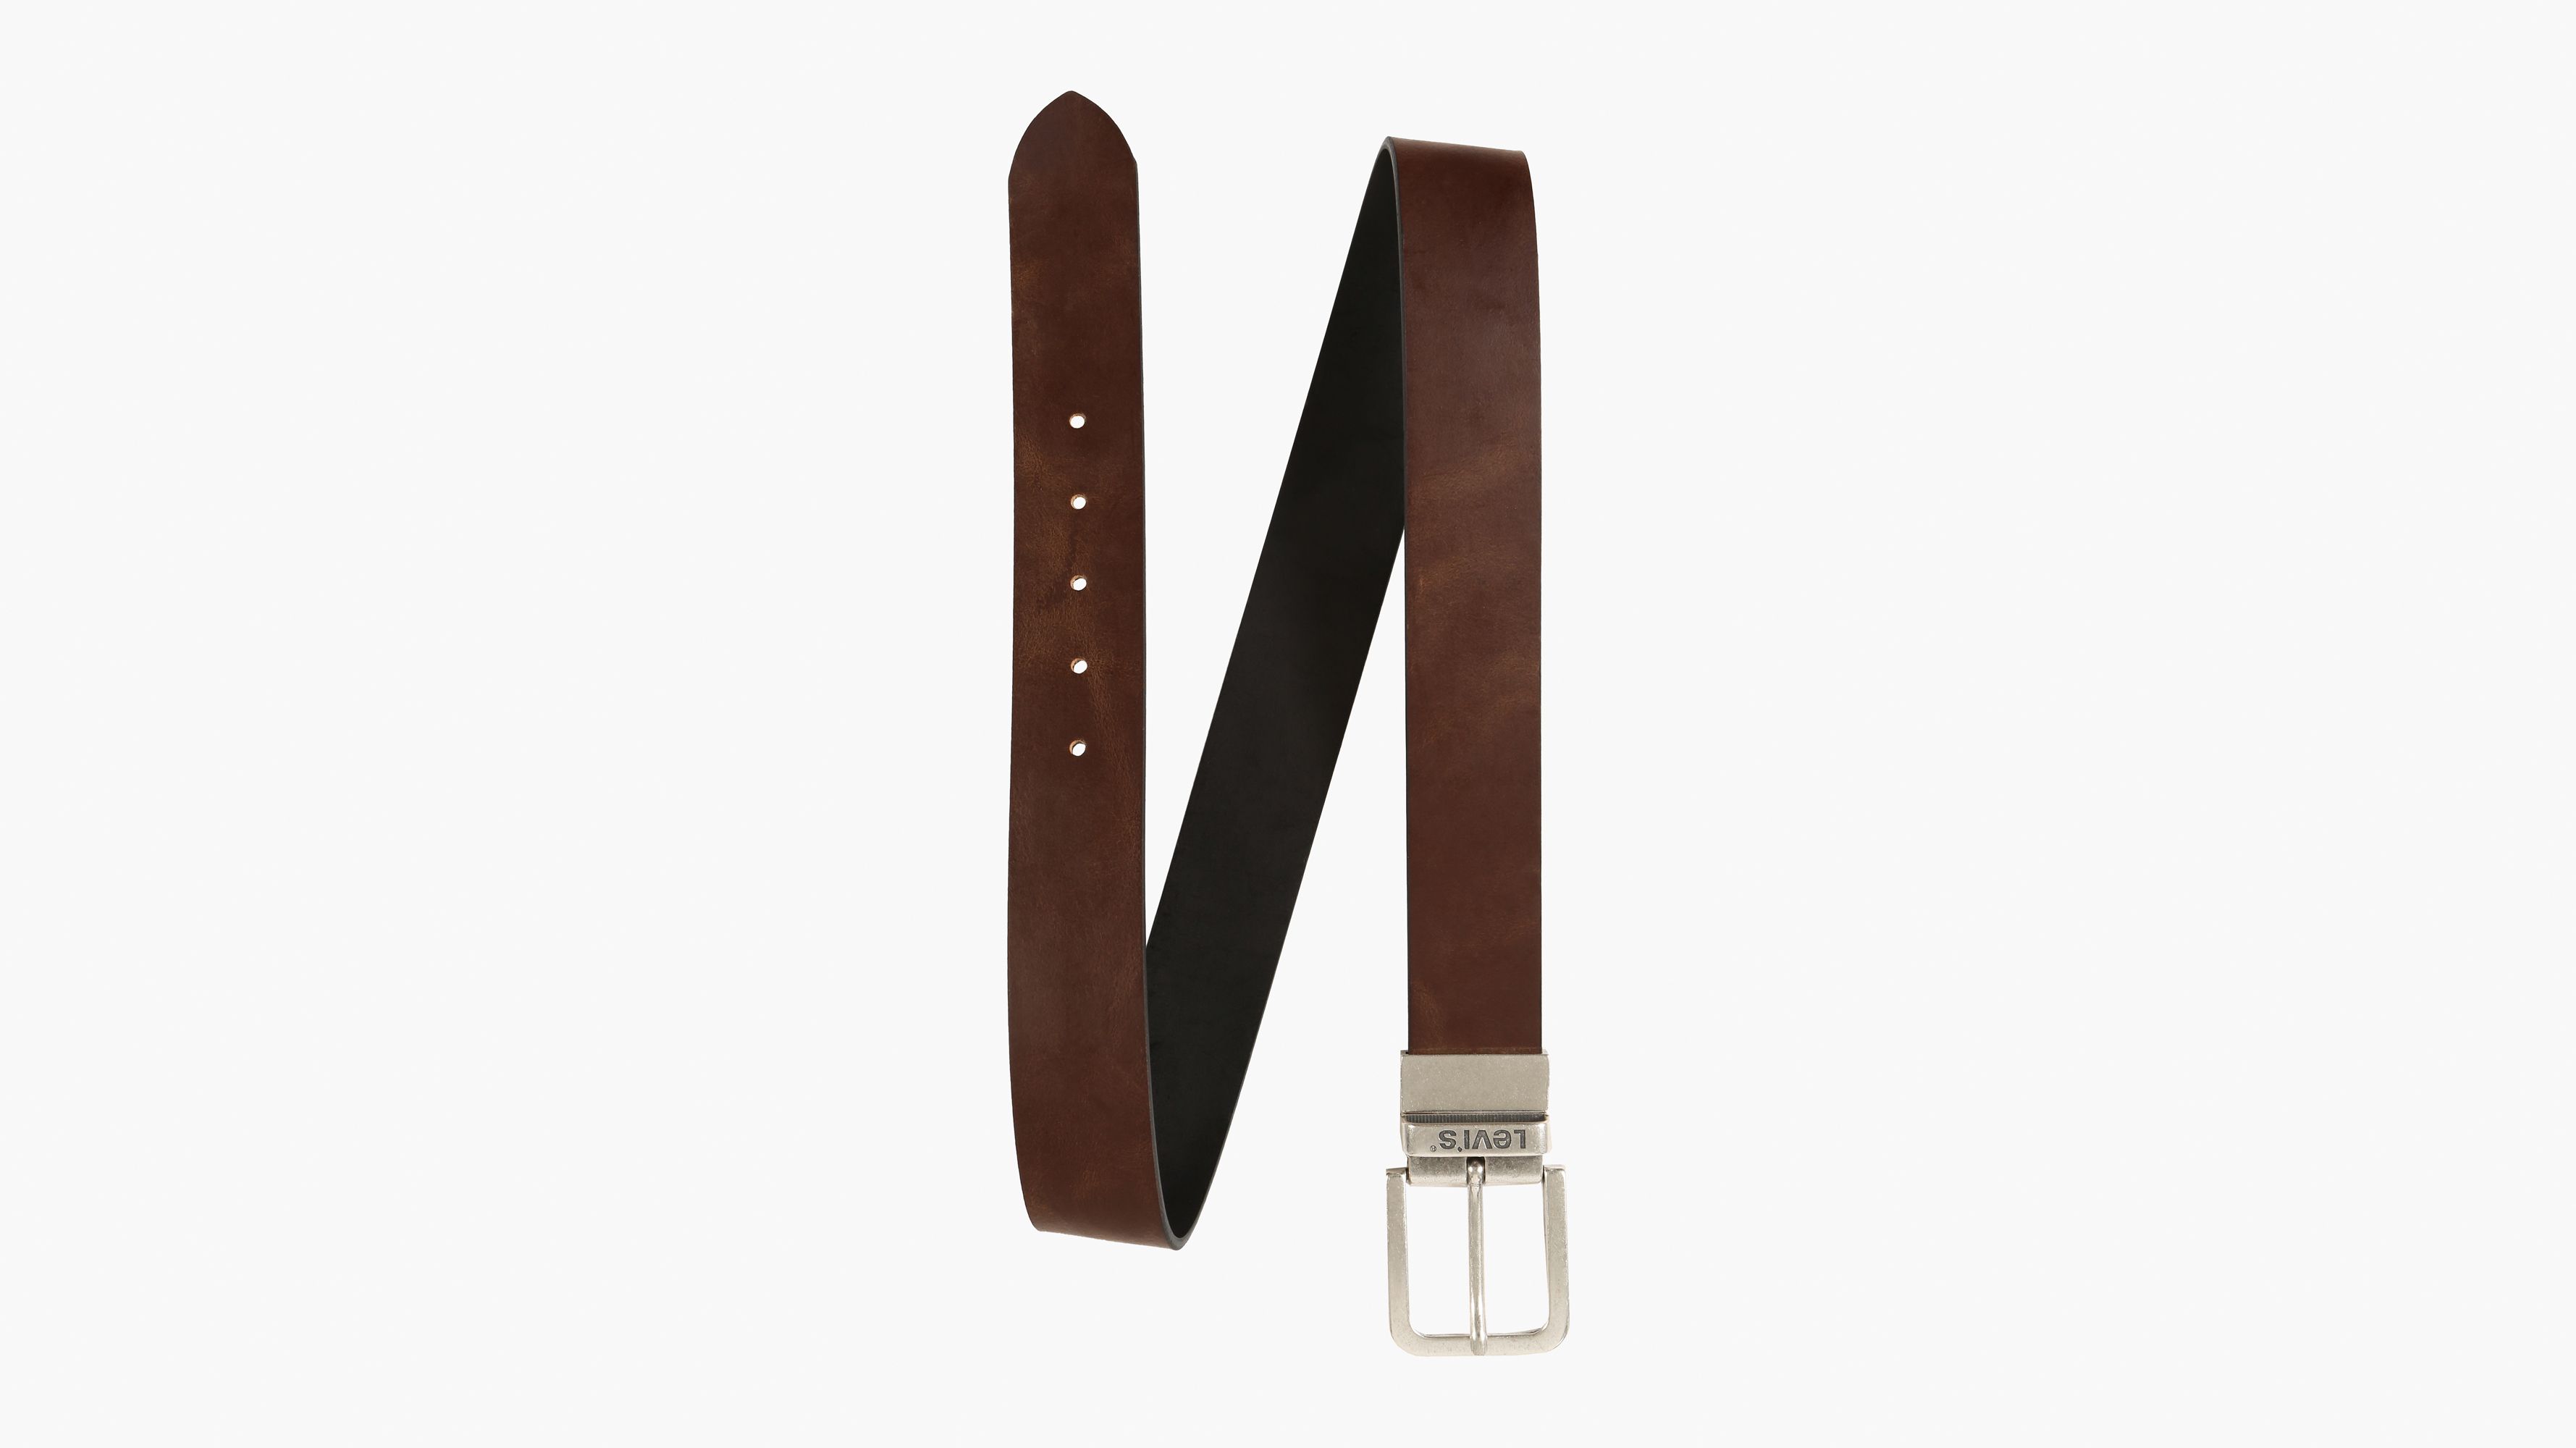 DENIZEN® from Levi's® Men's Leather Belt - Brown